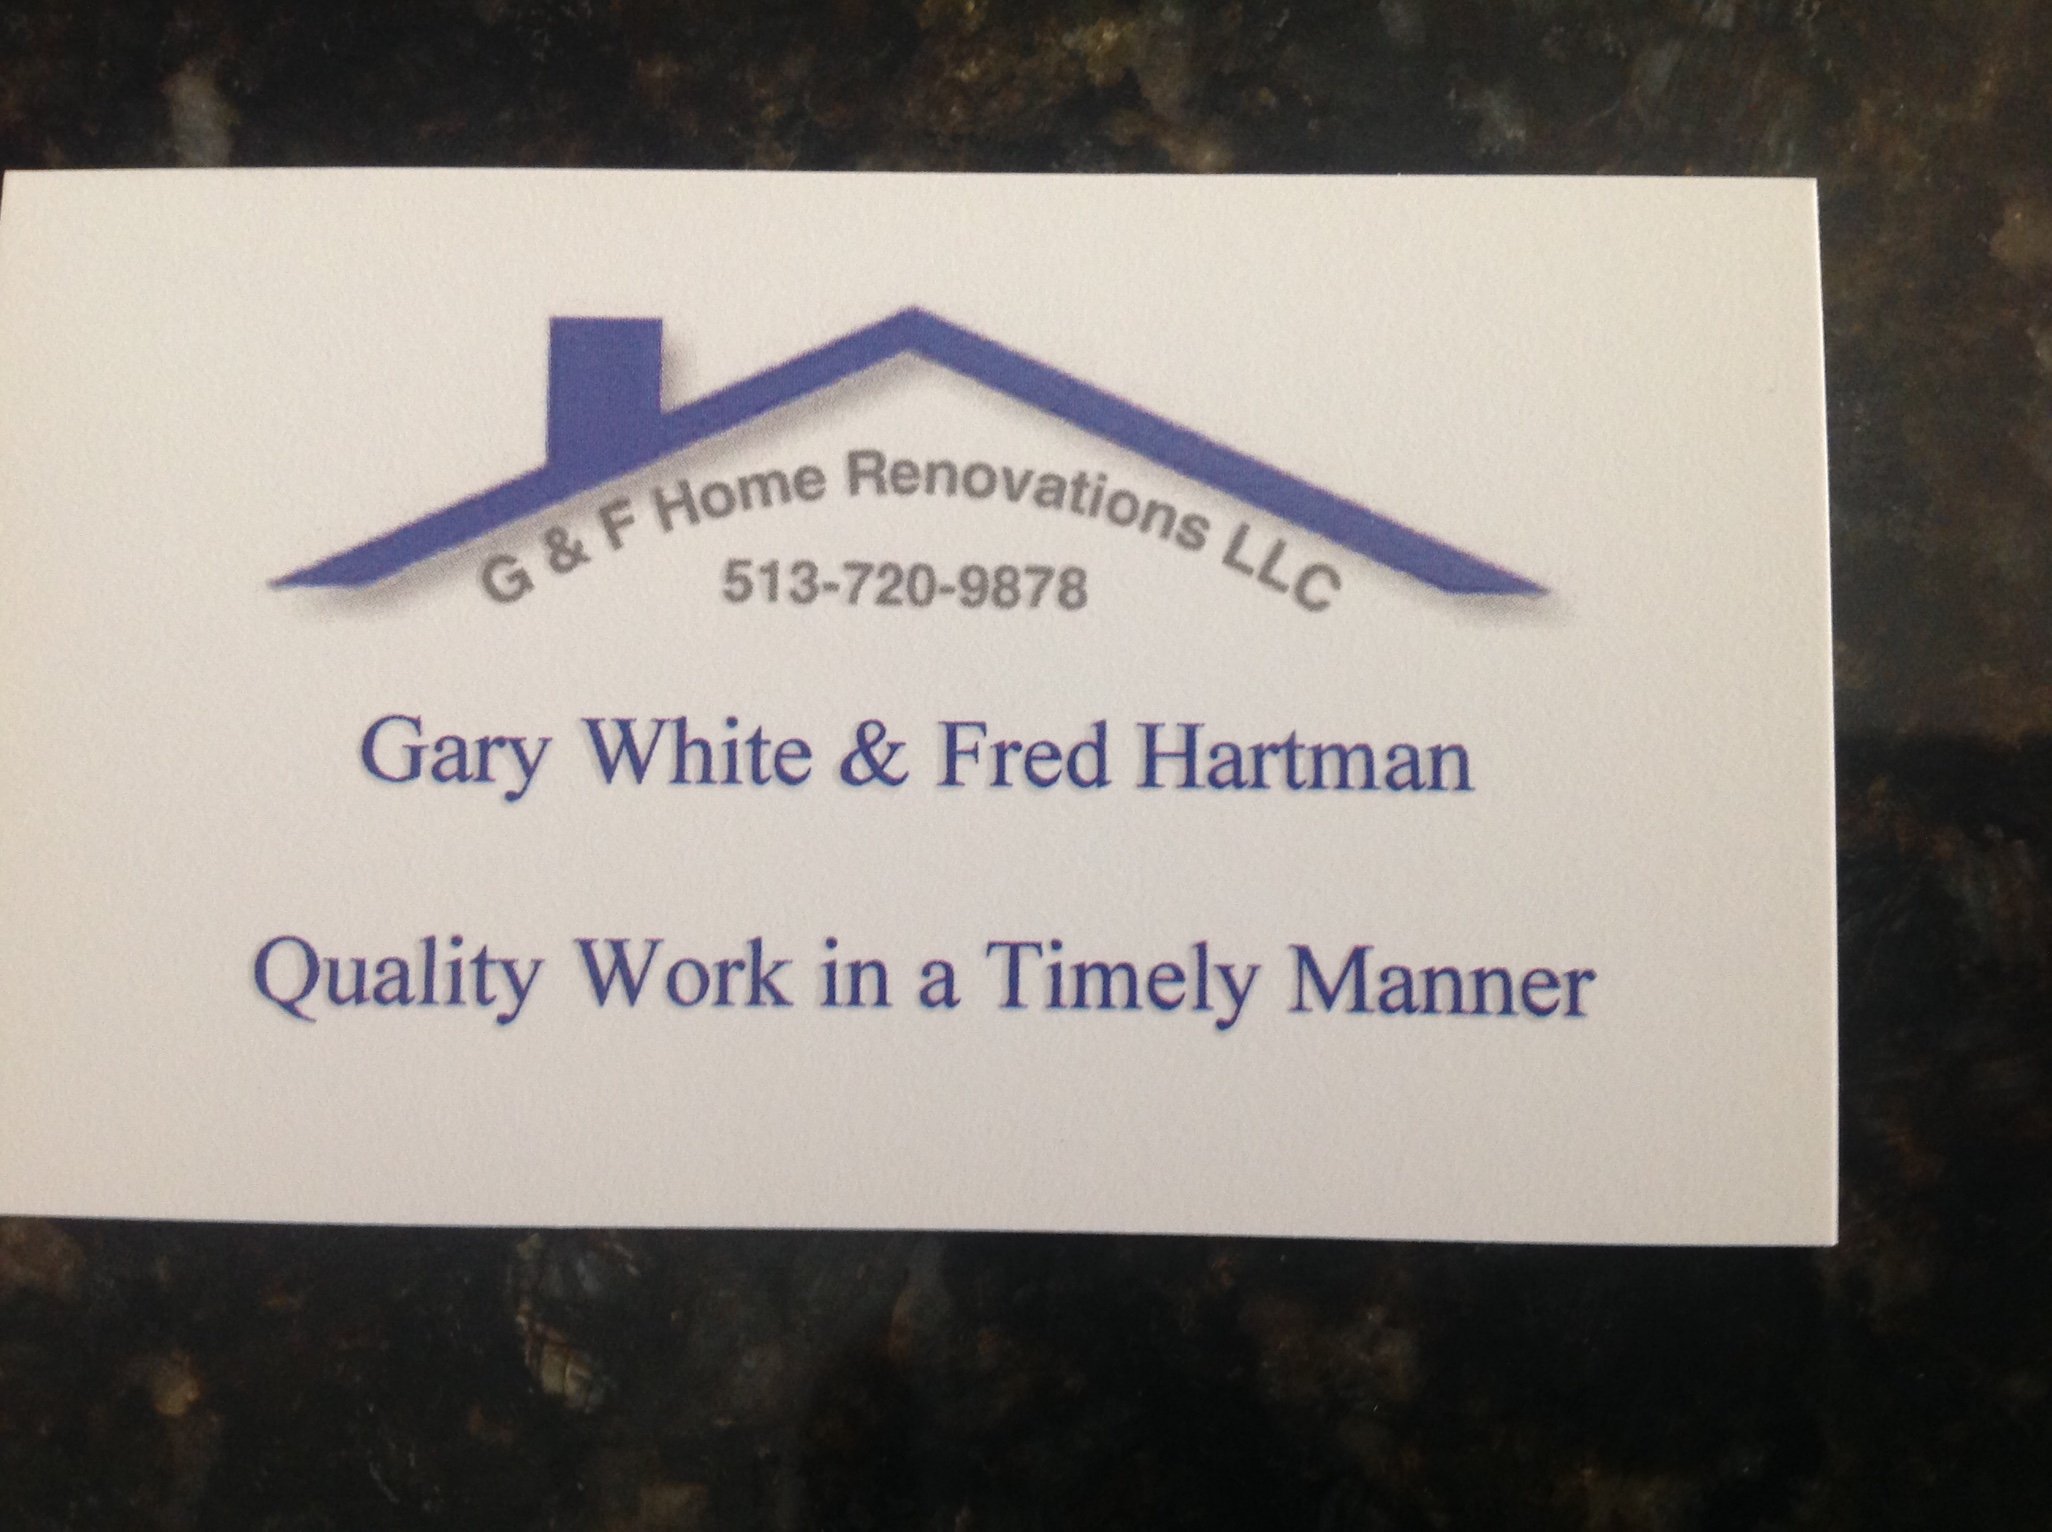 G & F Home Renovations, LLC Logo